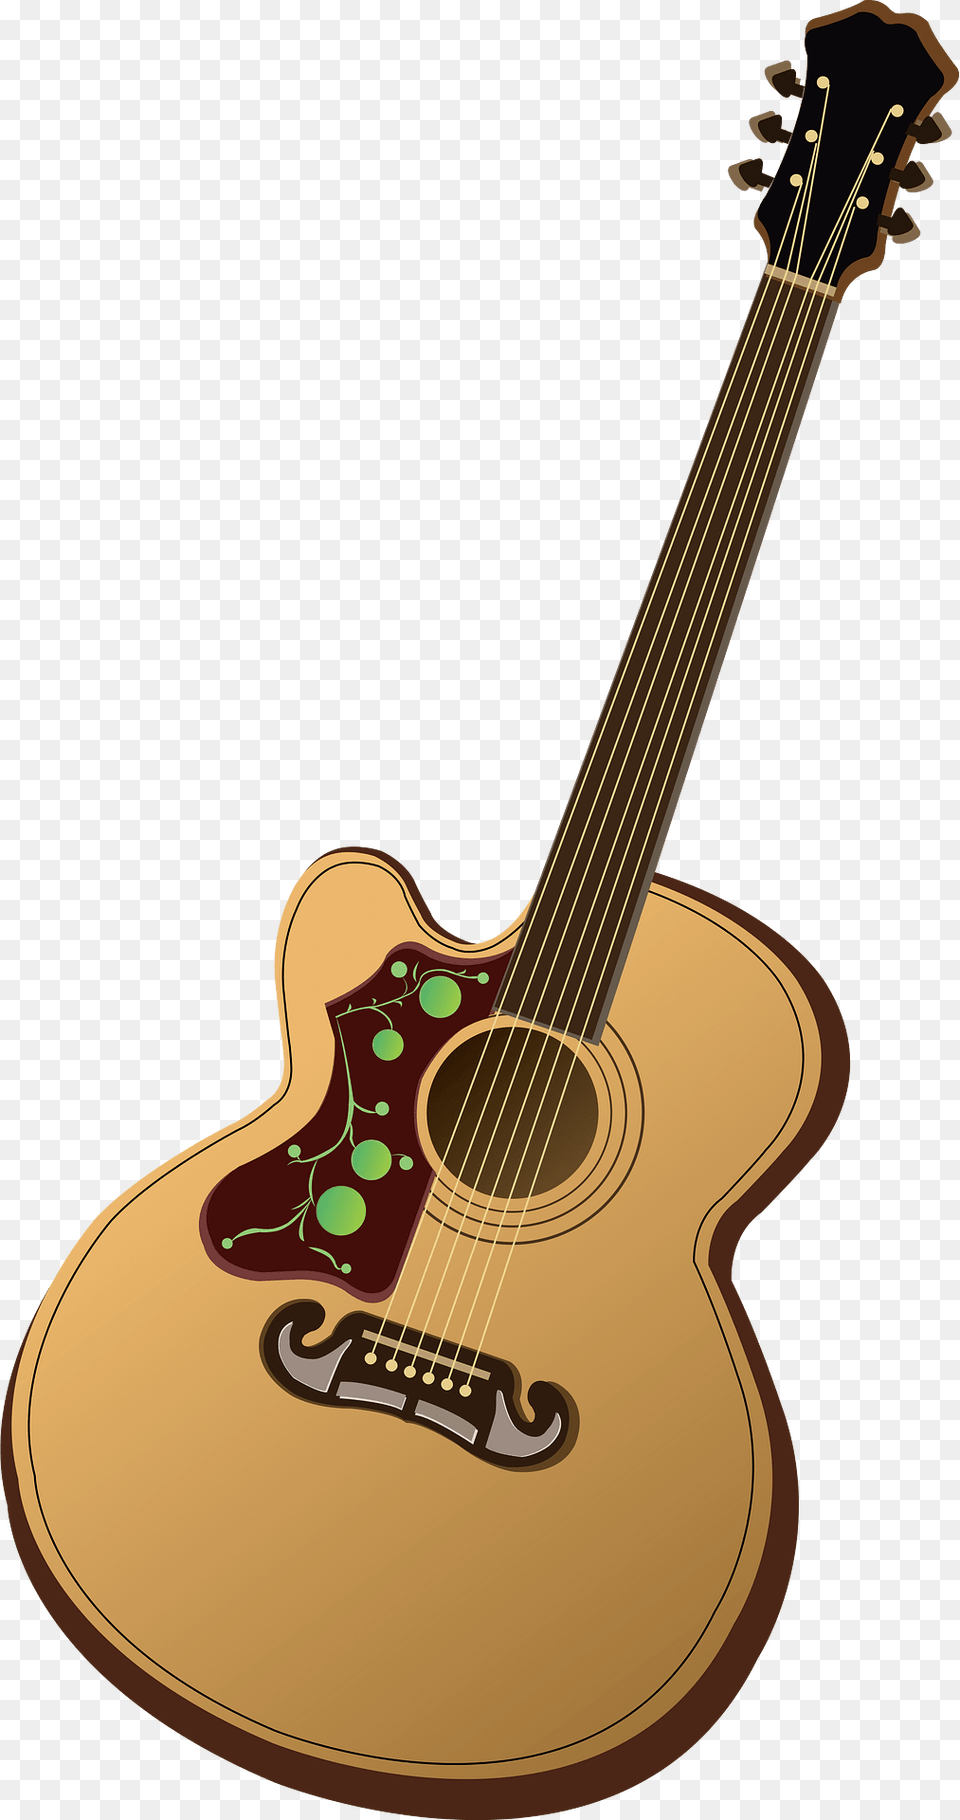 Guitar Clipart, Musical Instrument, Bass Guitar Png Image